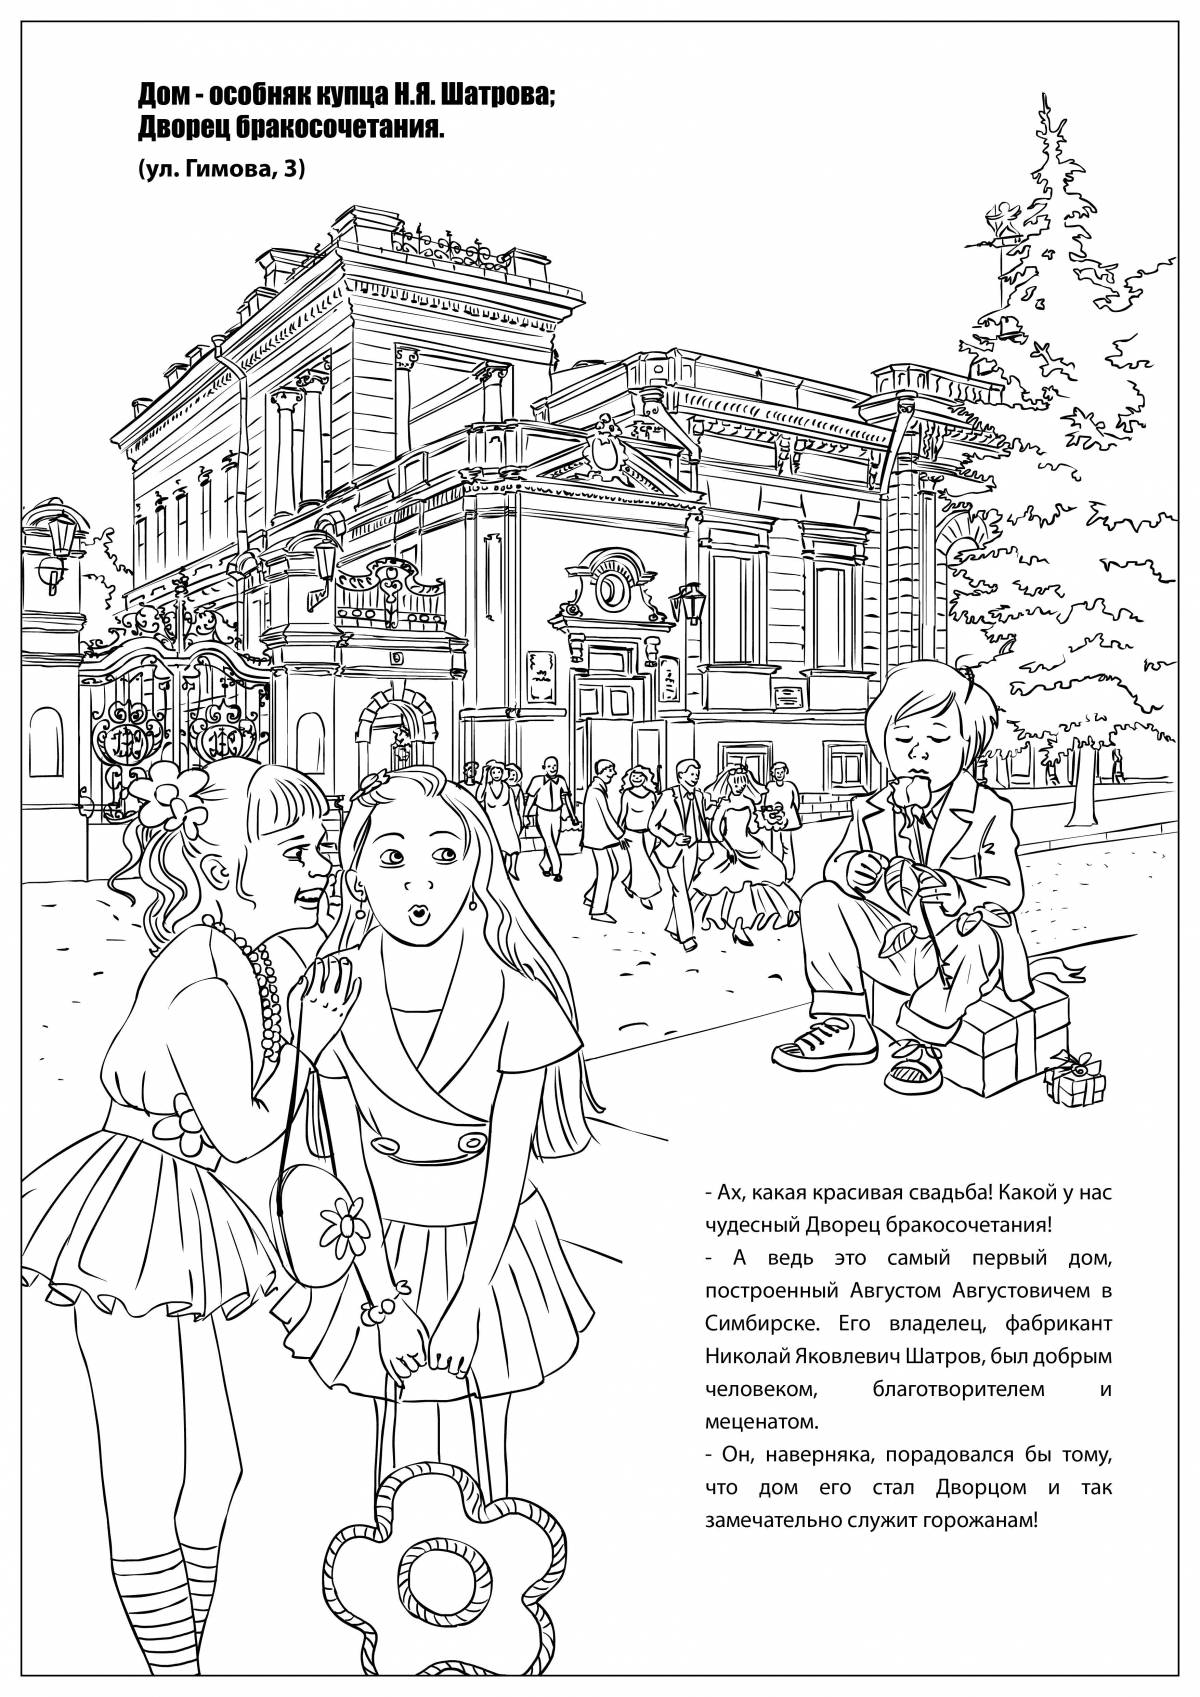 Bright ulyanovsk coloring book